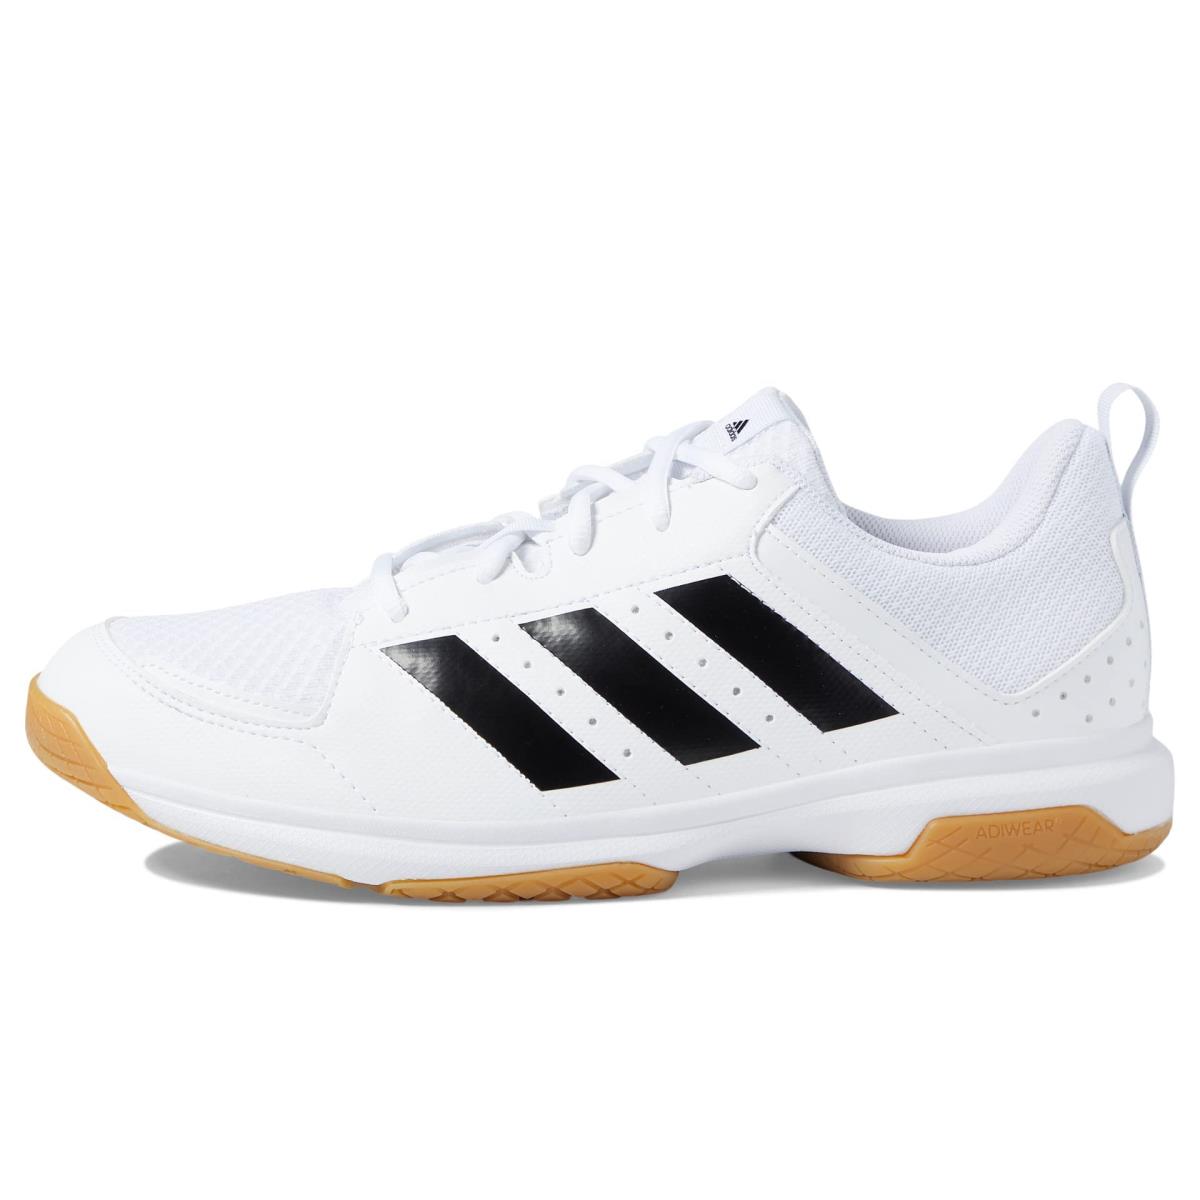 Adidas Men`s Ligra 7 Track and Field Shoe White/Black/White